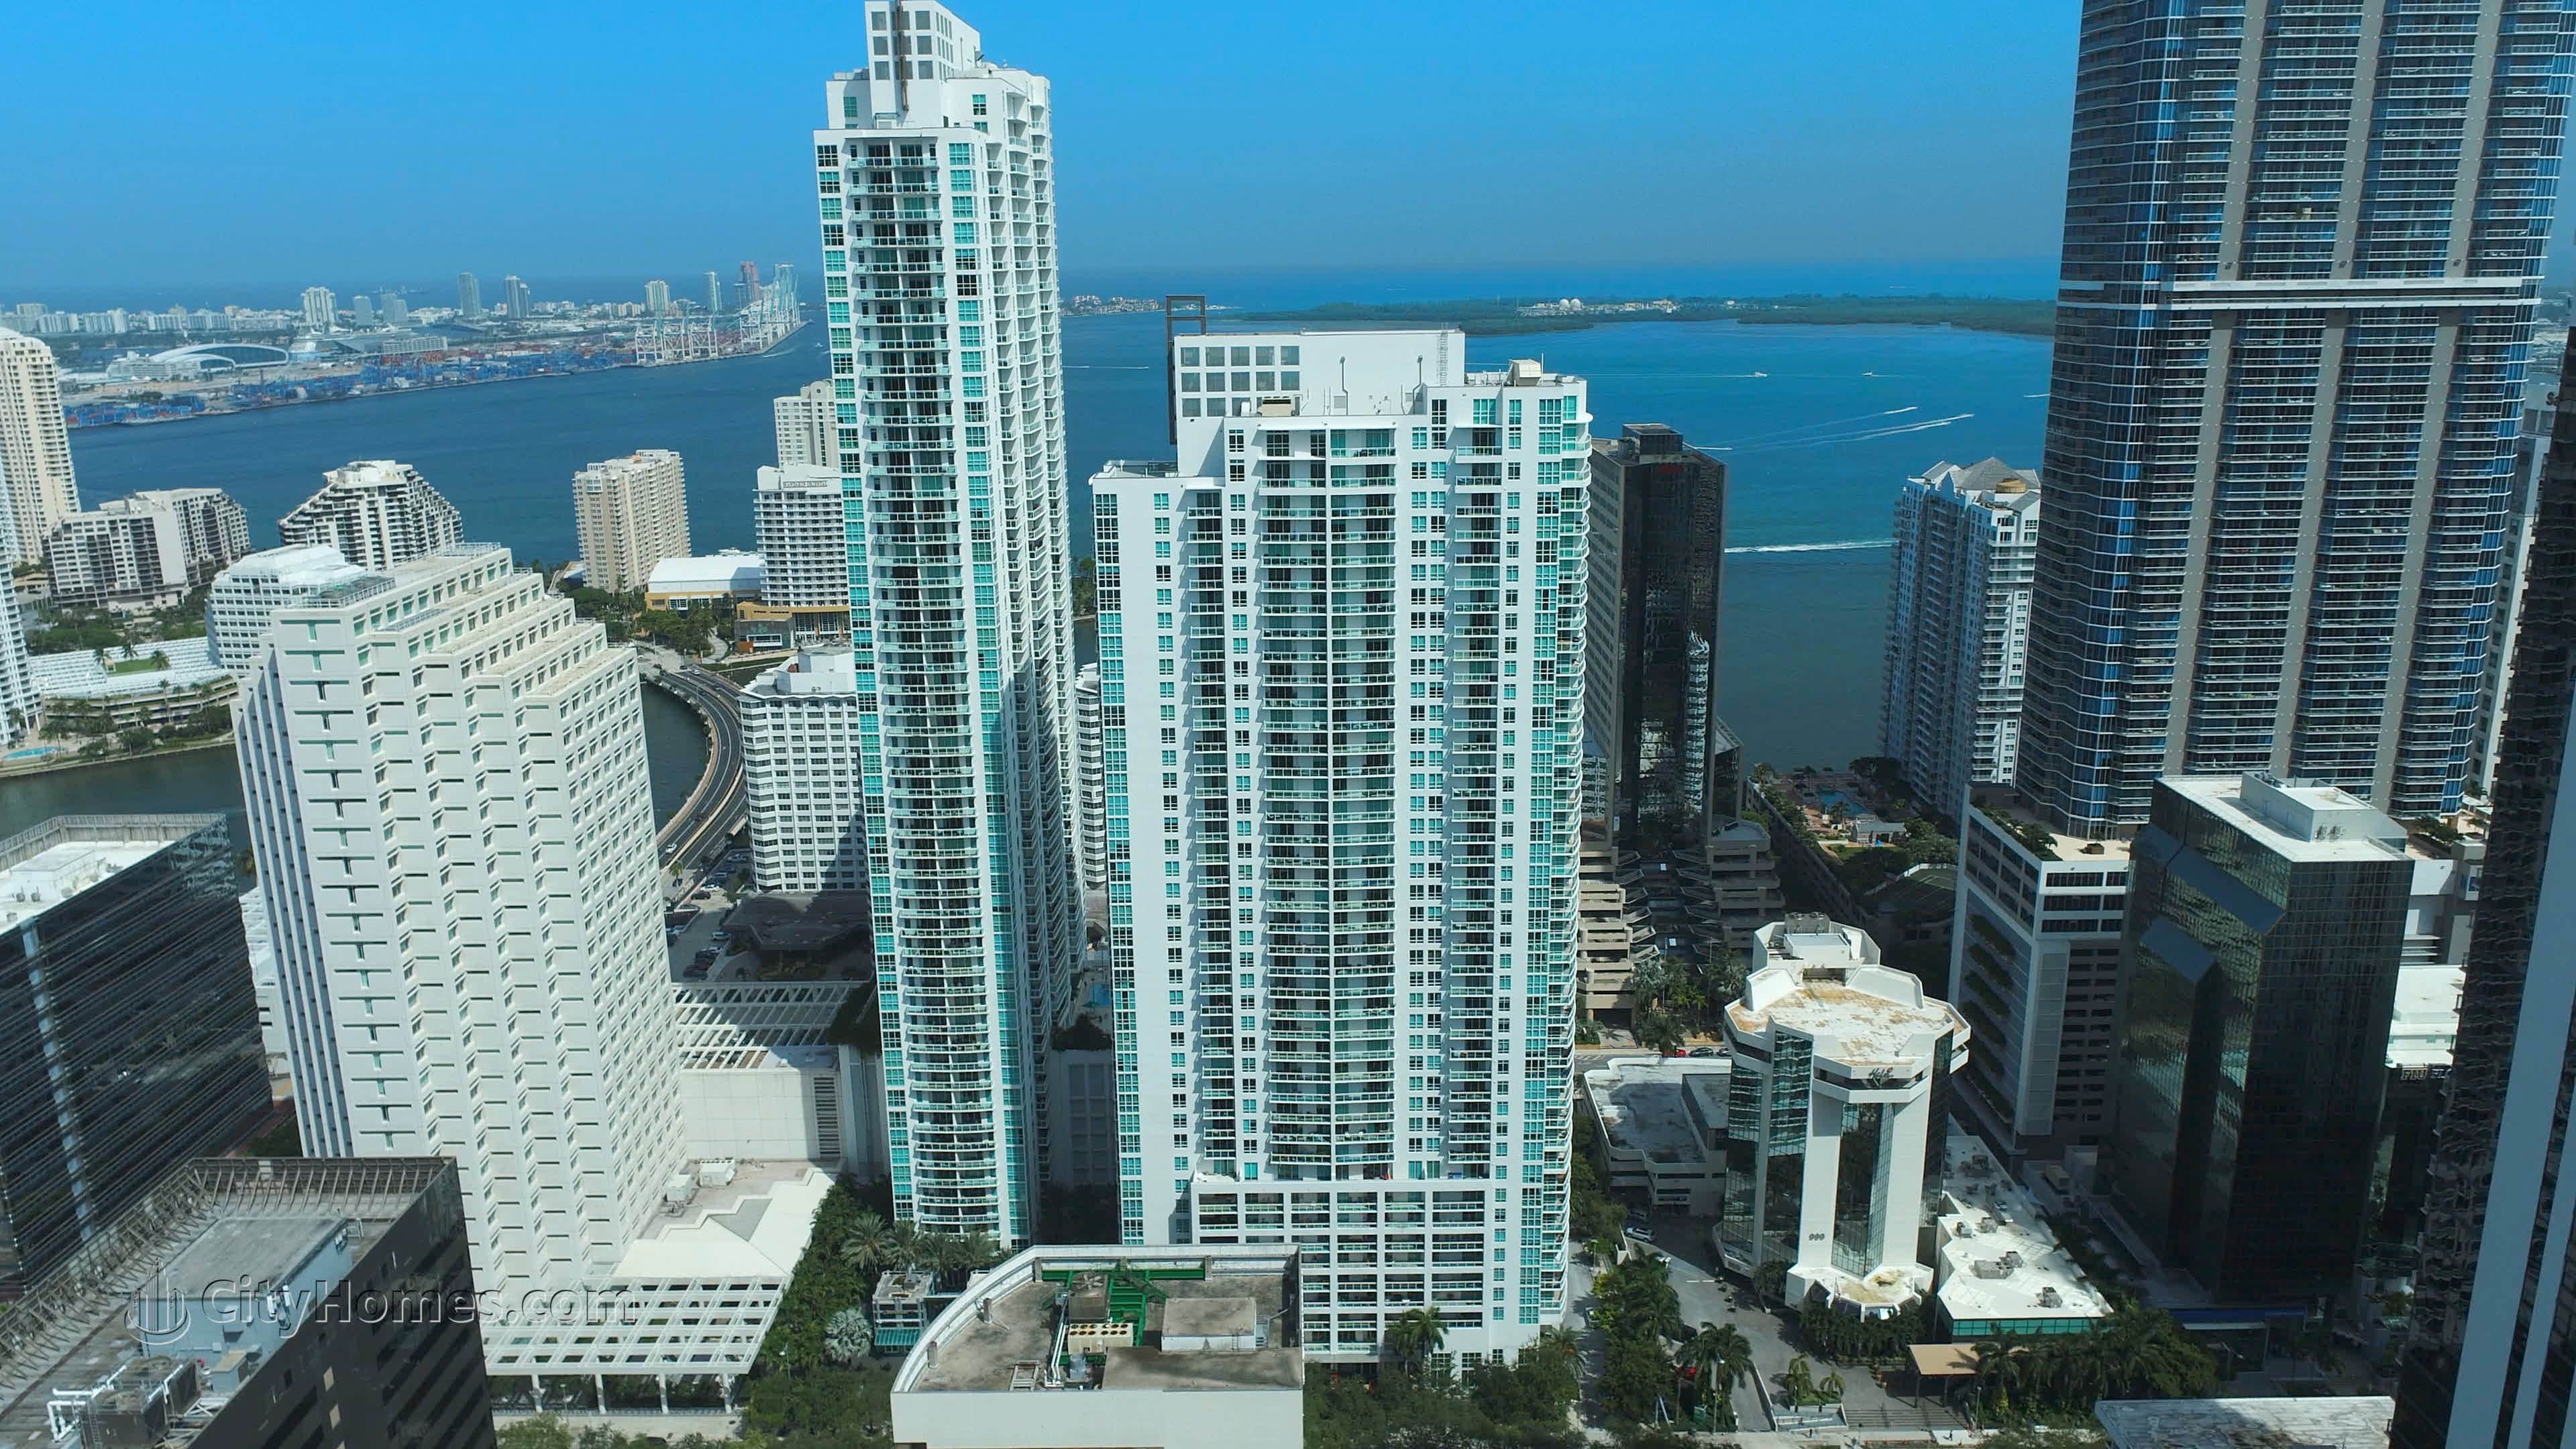 2. Plaza on Brickell - 950 Tower Gebäude bei 950 Brickell Bay Drive Avenue, Miami, FL 33131